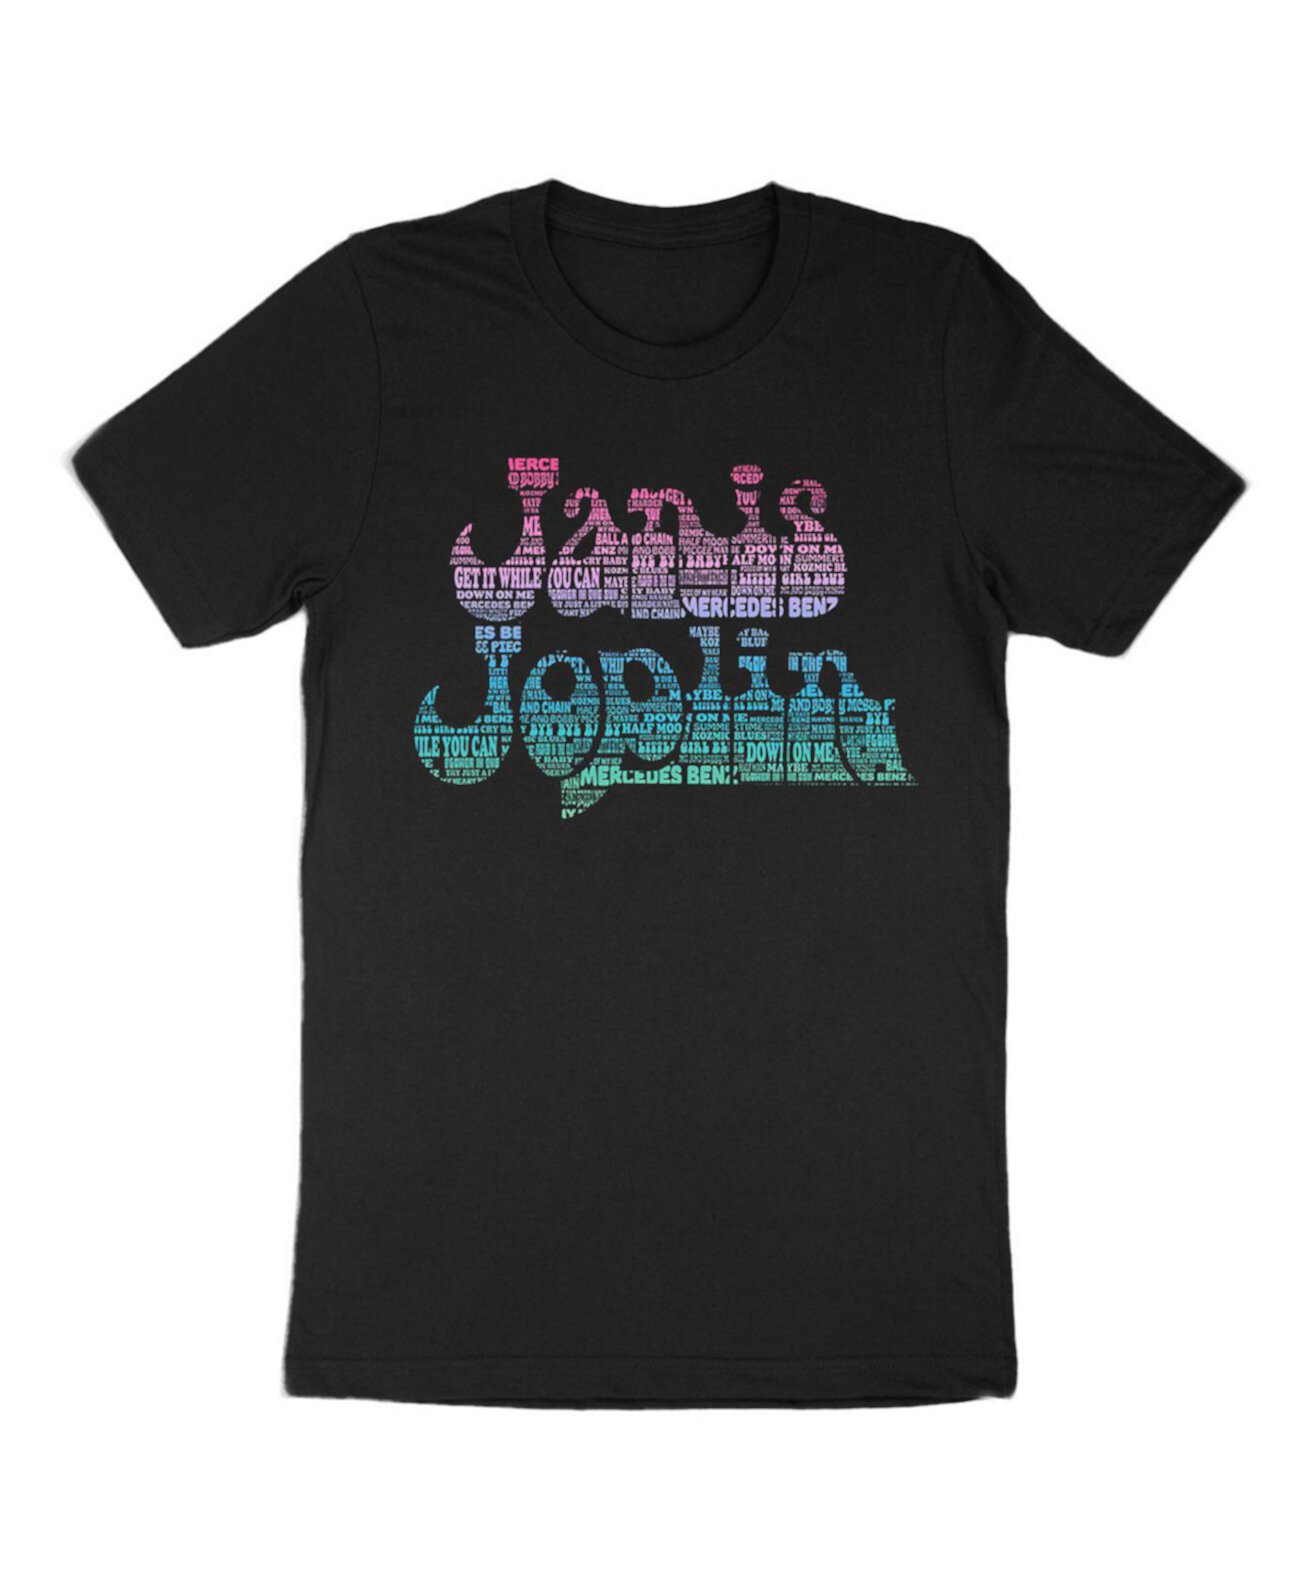 Мужская футболка с графическим логотипом Janis MONSTER DIGITAL TSC